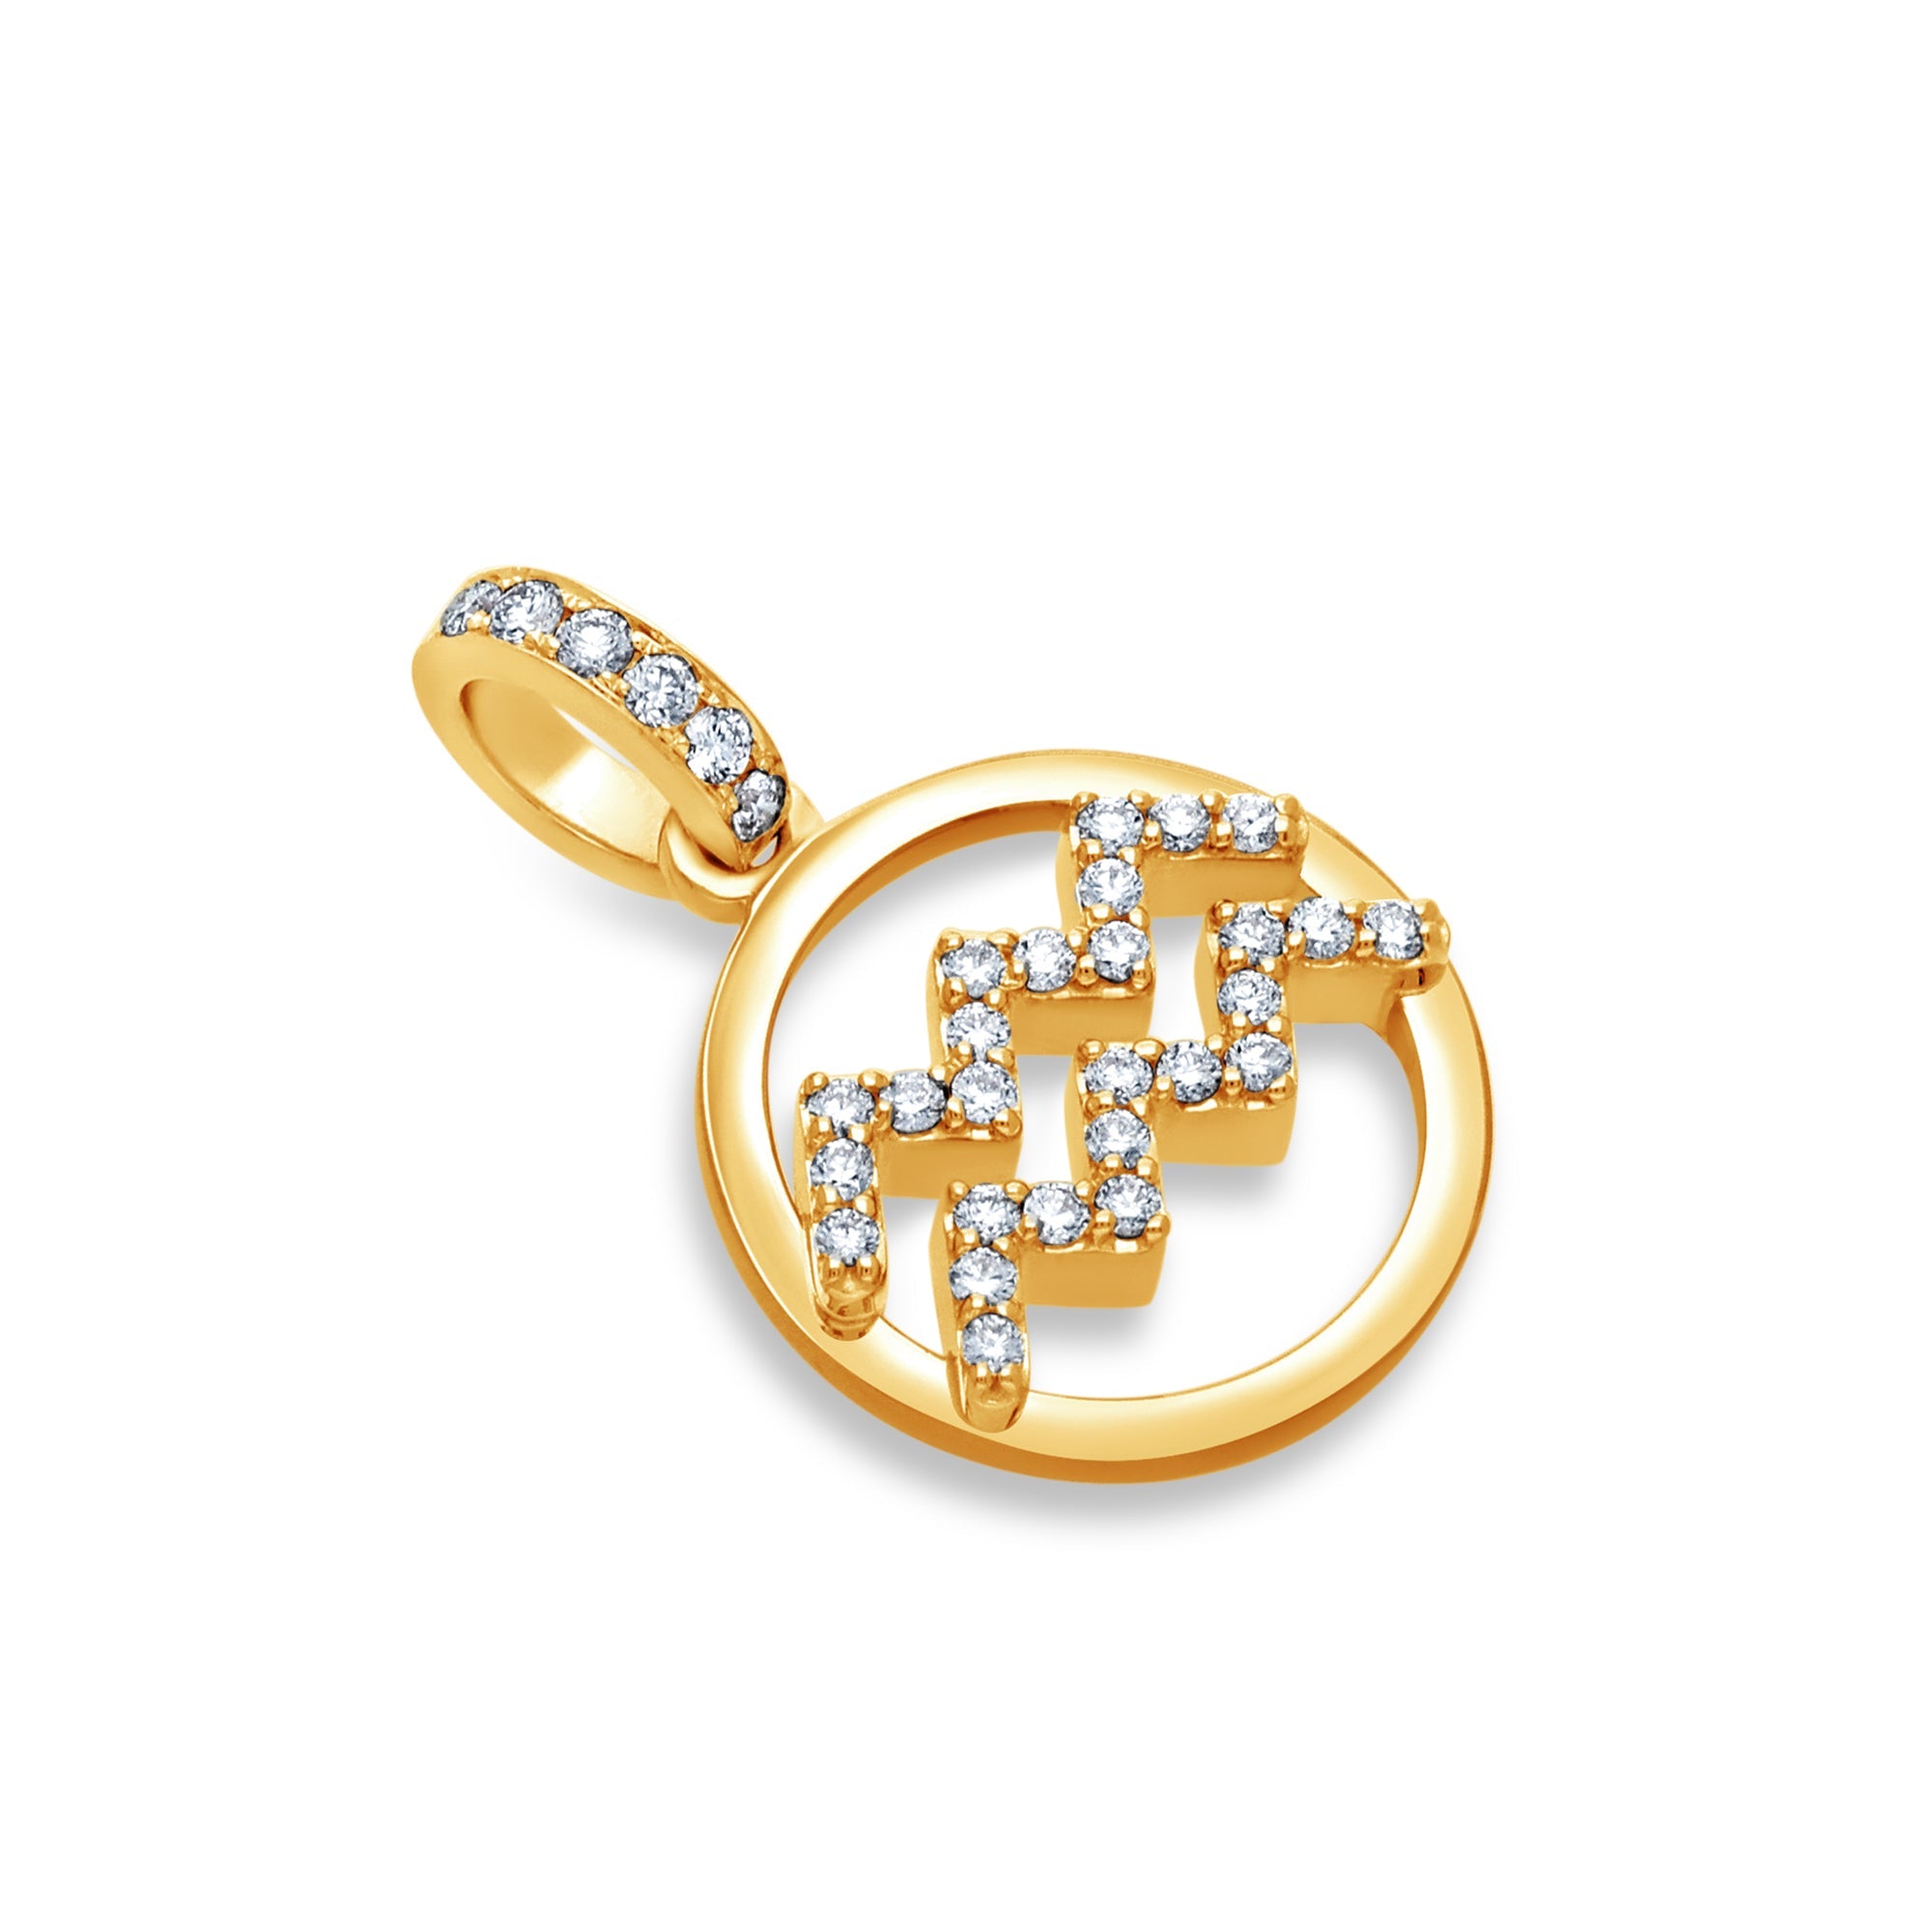 Nano Zodiac Necklace: Aquarius (14K ROSE GOLD) - IF & Co. Custom Jewelers